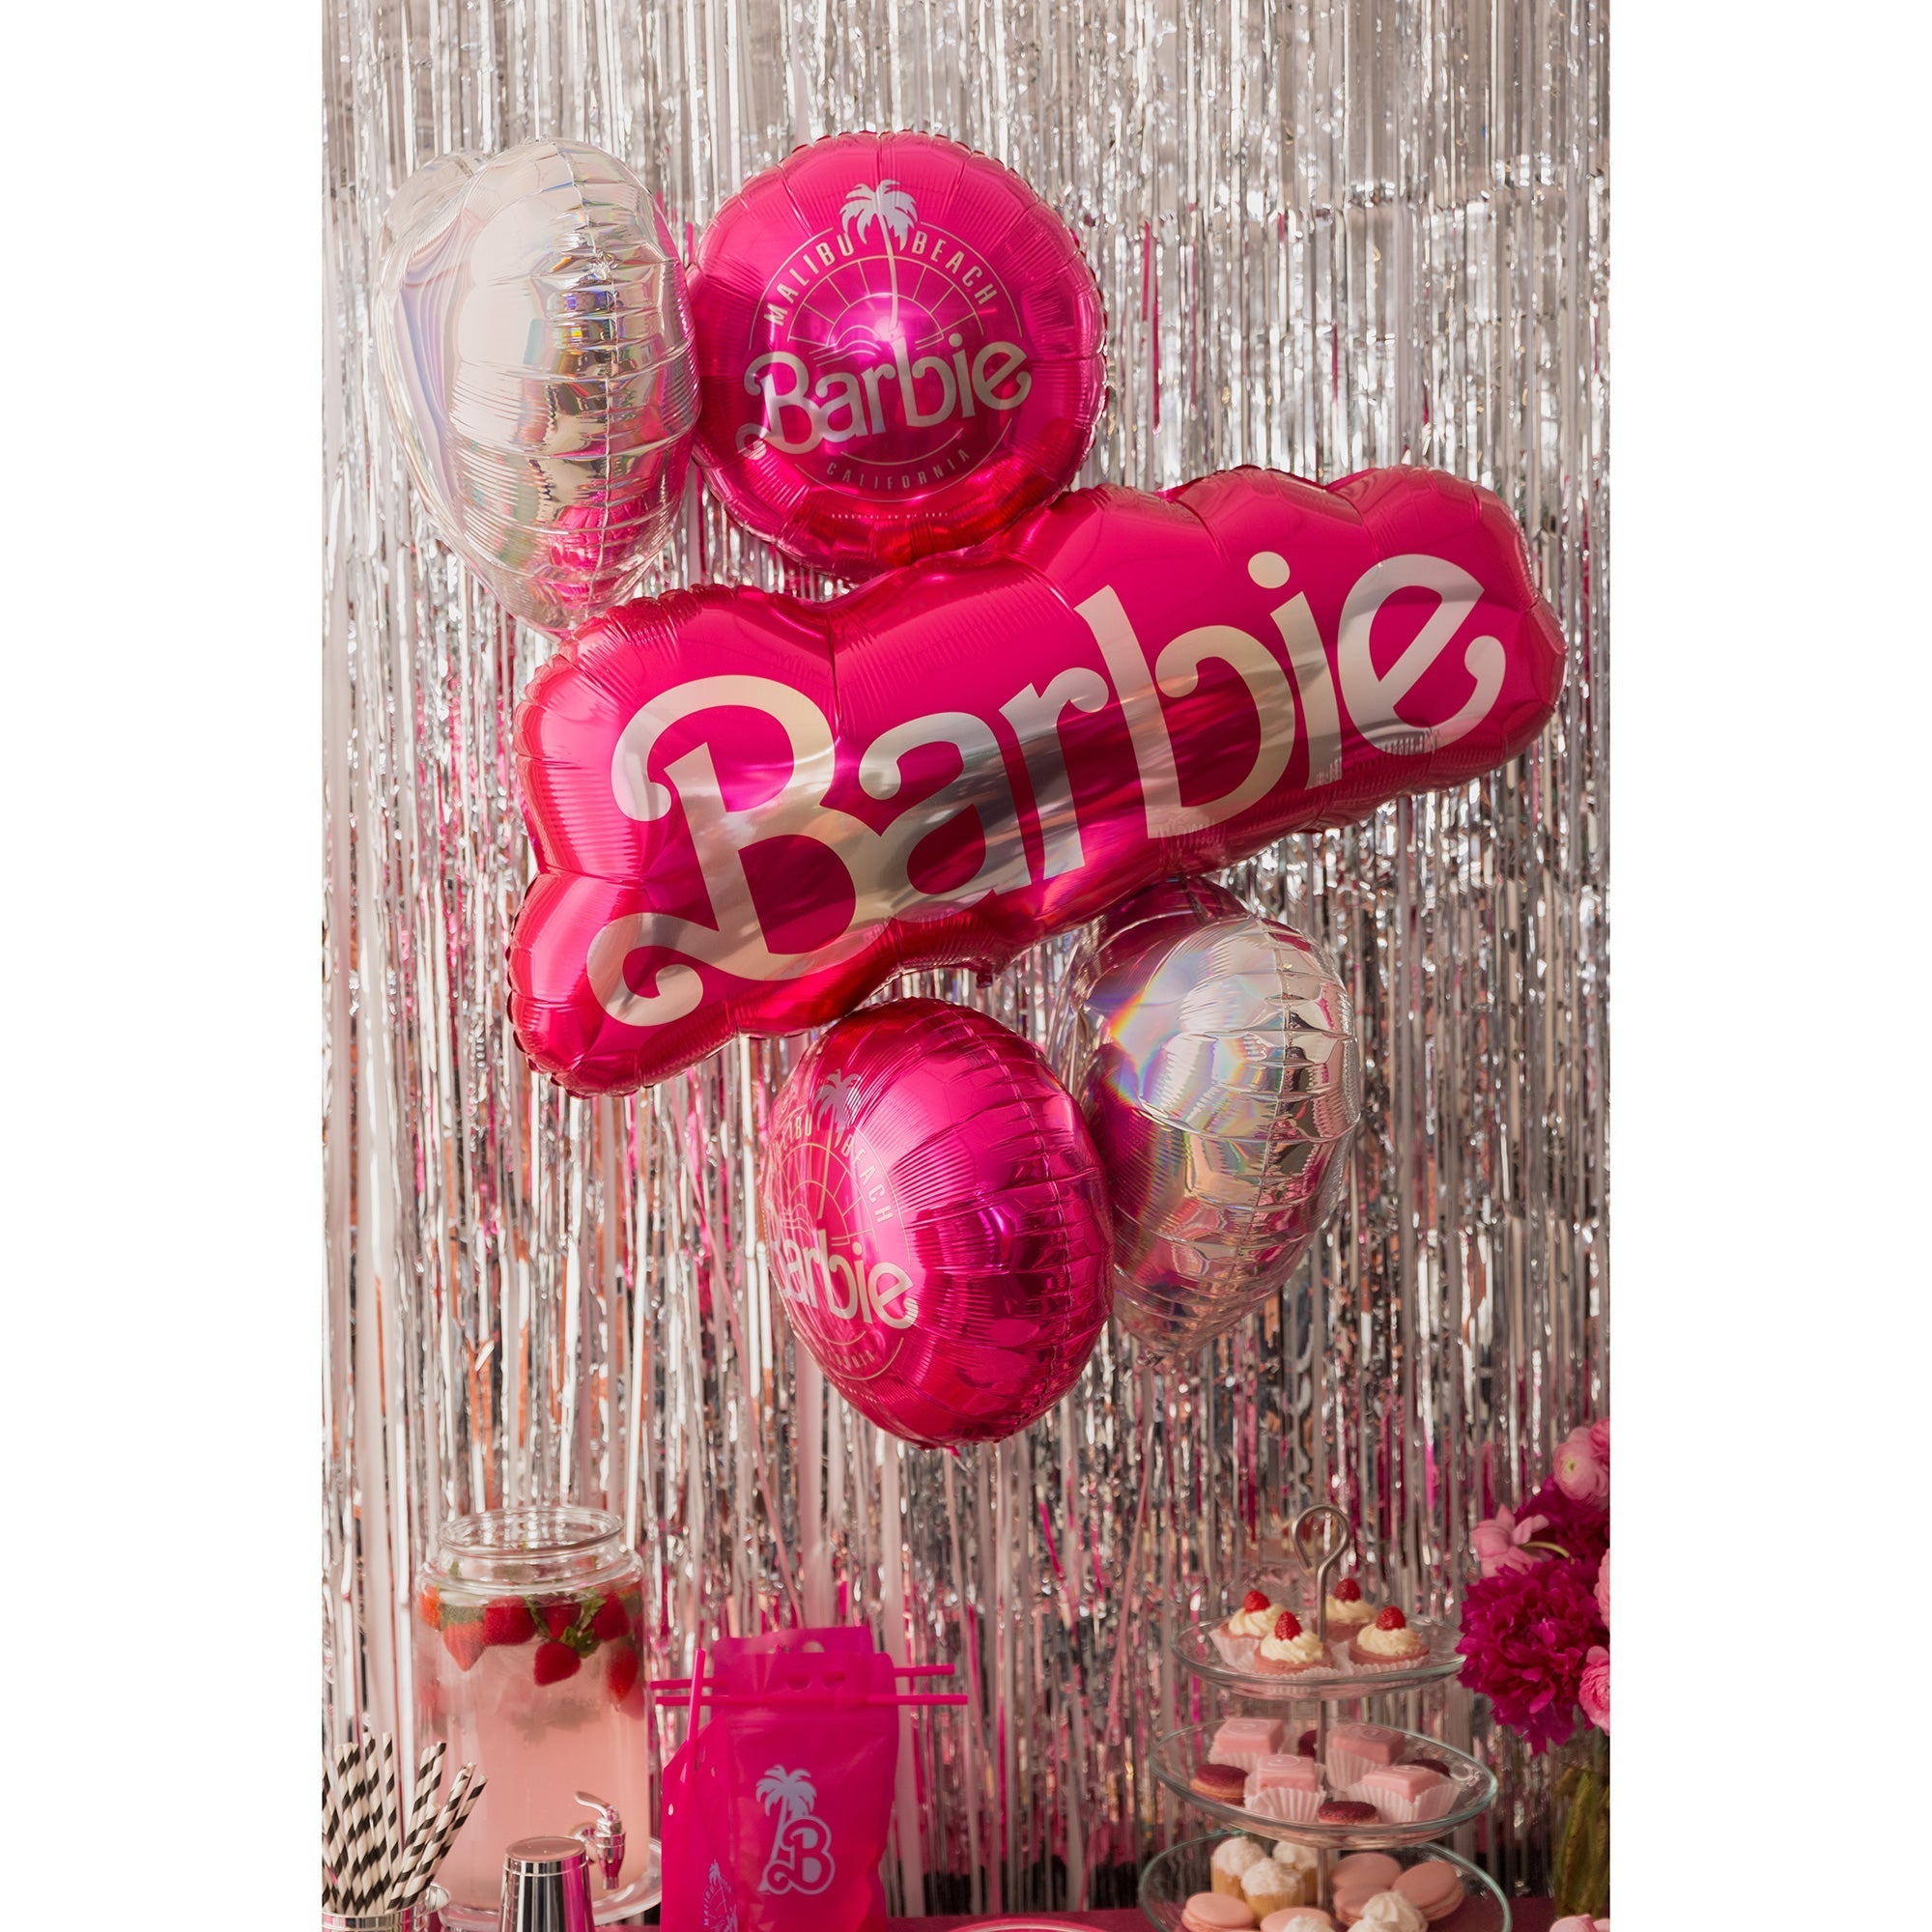  Ballon Rose Barbie